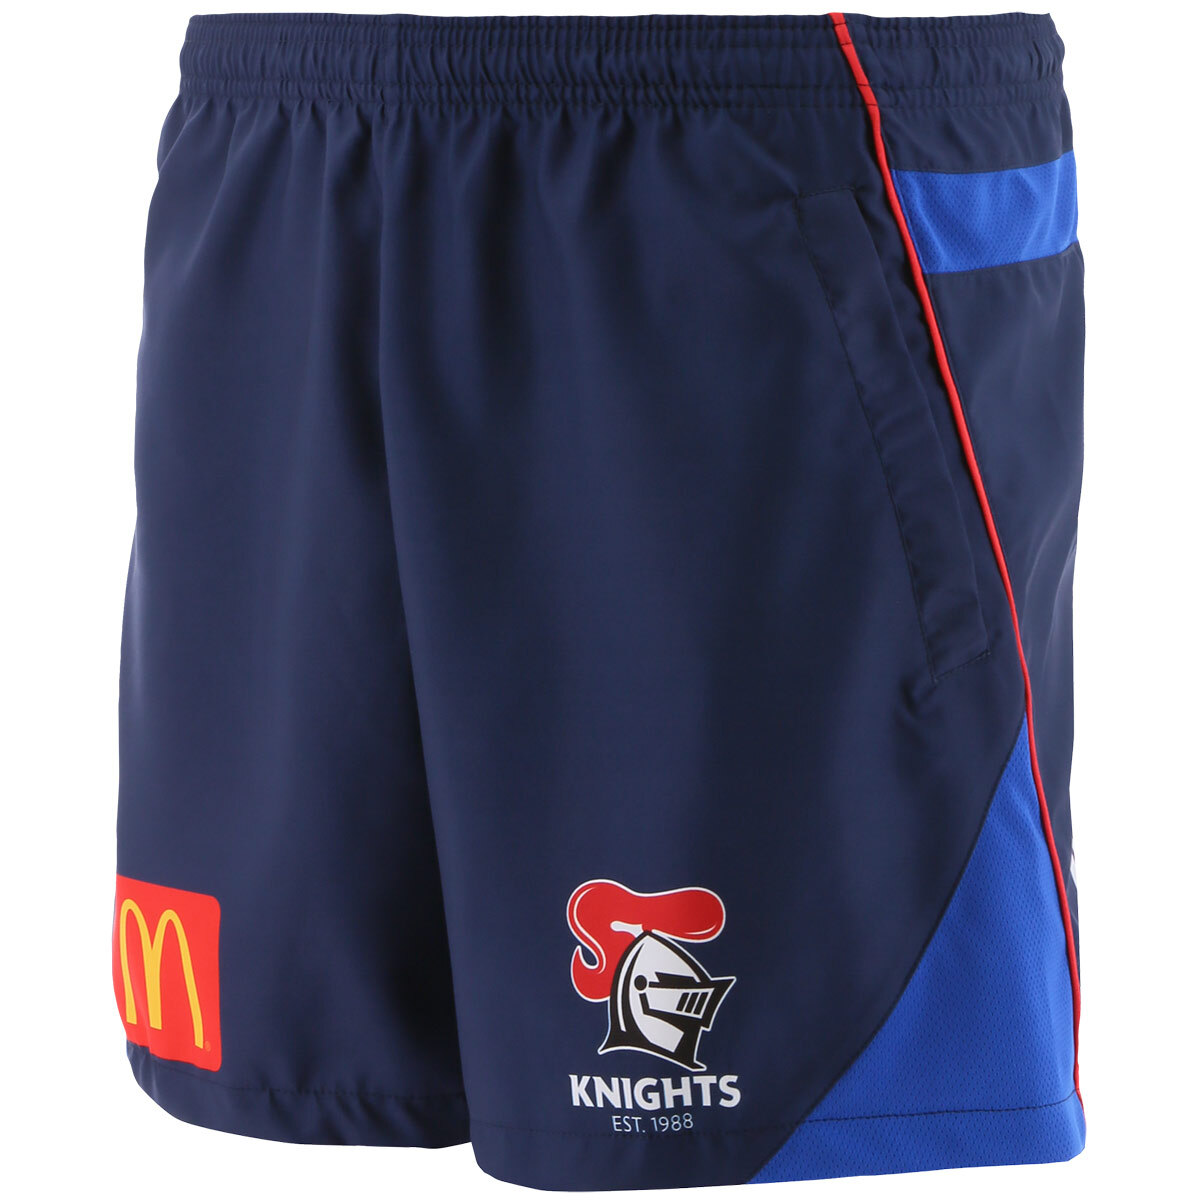 Newcastle Knights NRL 2021 Home Shorts Royal Sizes S-5XL!